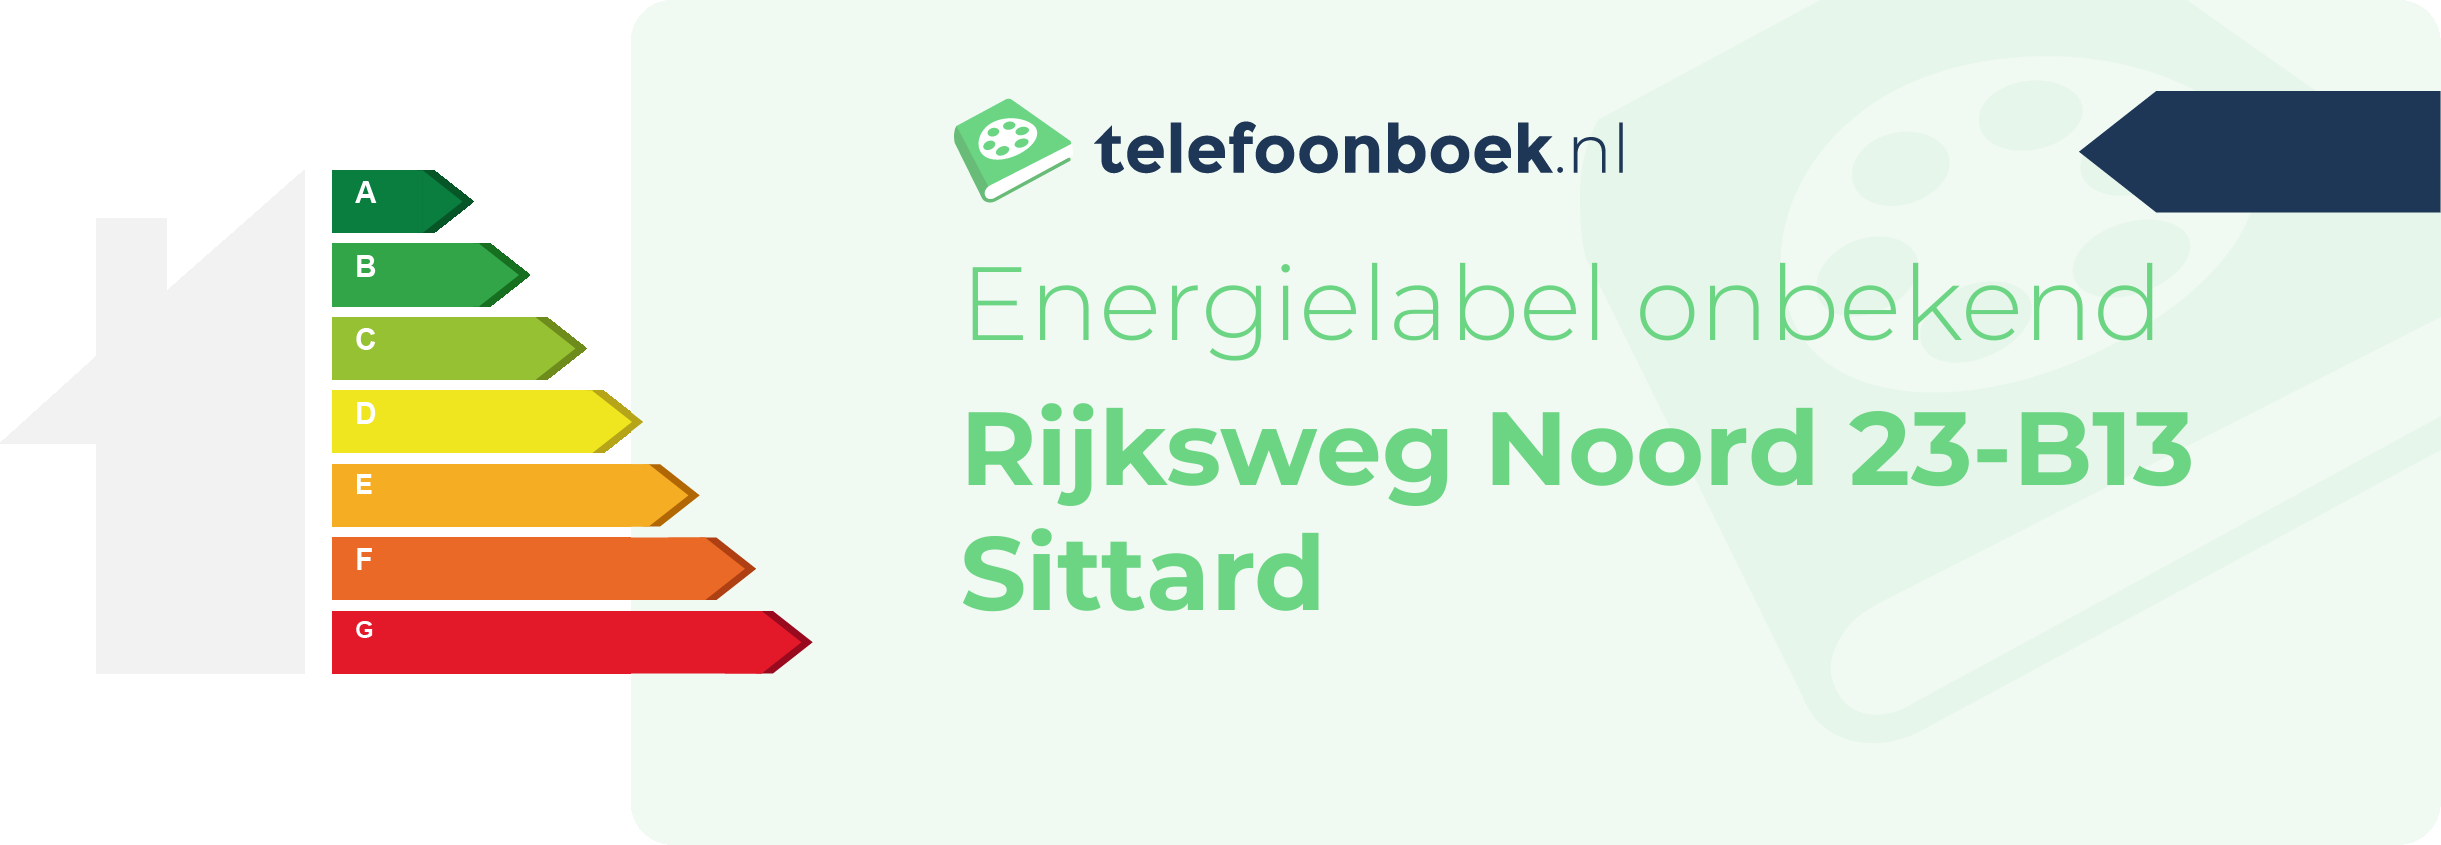 Energielabel Rijksweg Noord 23-B13 Sittard